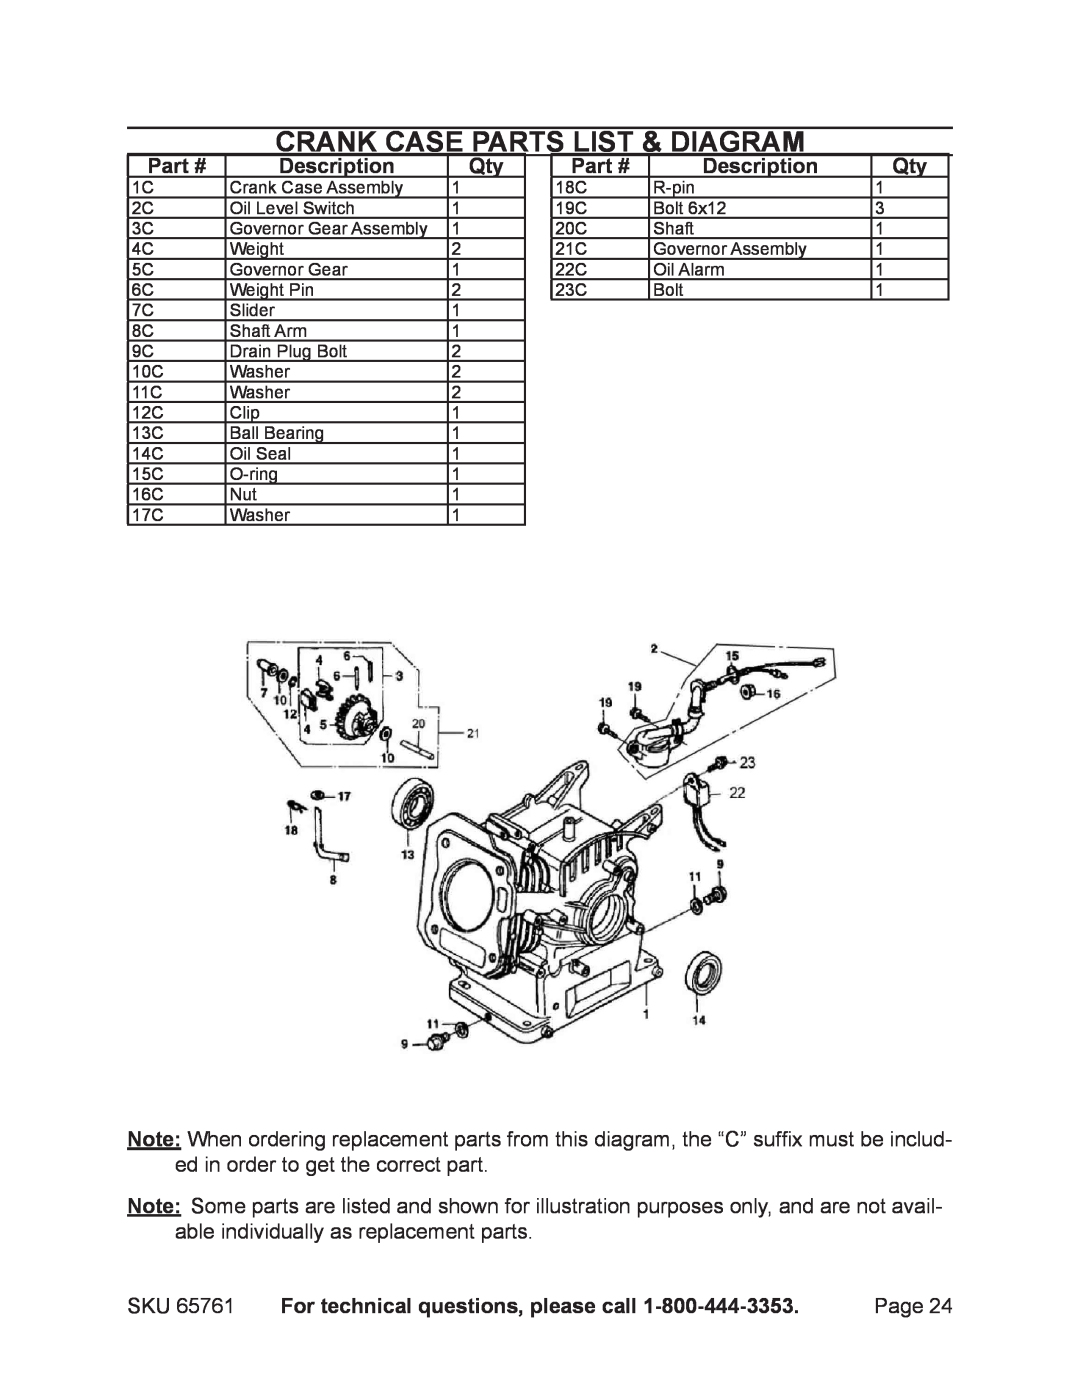 Harbor Freight Tools 65761 manual Crank case parts list & diagram, Description, For technical questions, please call 